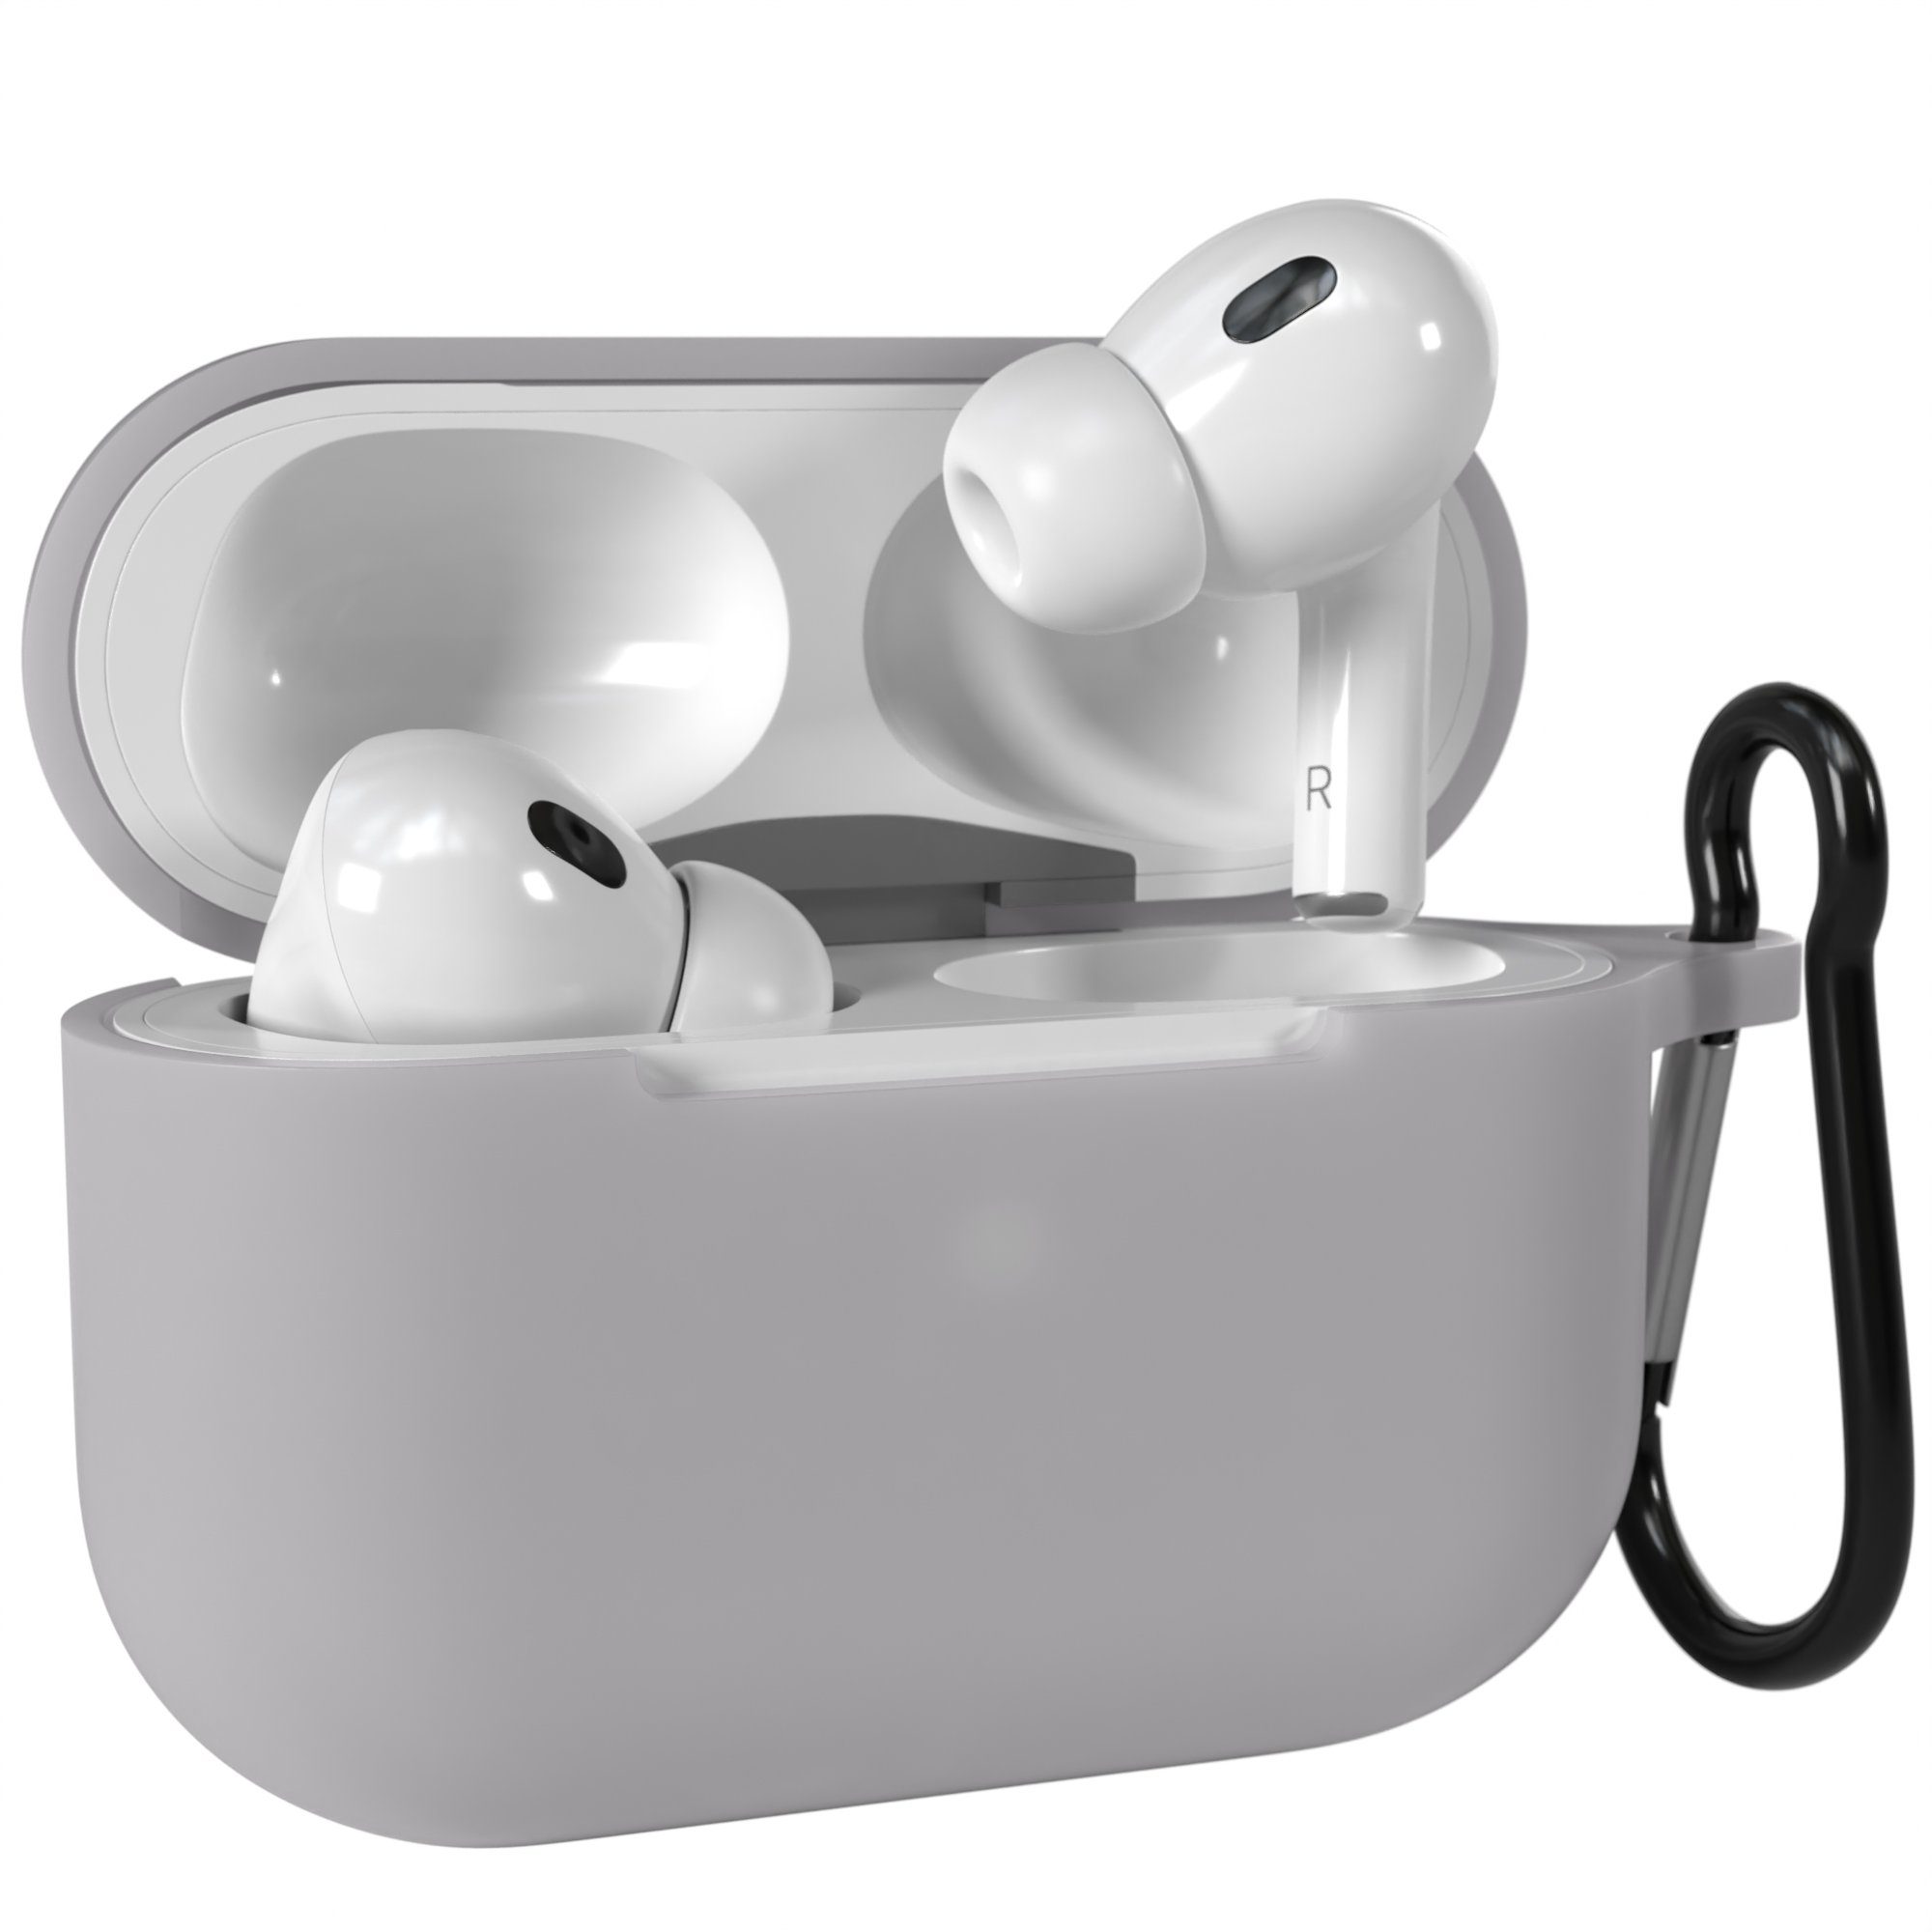 EAZY CASE Kopfhörer-Schutzhülle Silikon Hülle kompatibel mit Apple AirPods Pro 2, Box Hülle Rutschfestes Etui Stoßfest Schutzhülle Cover Anthrazit Grau